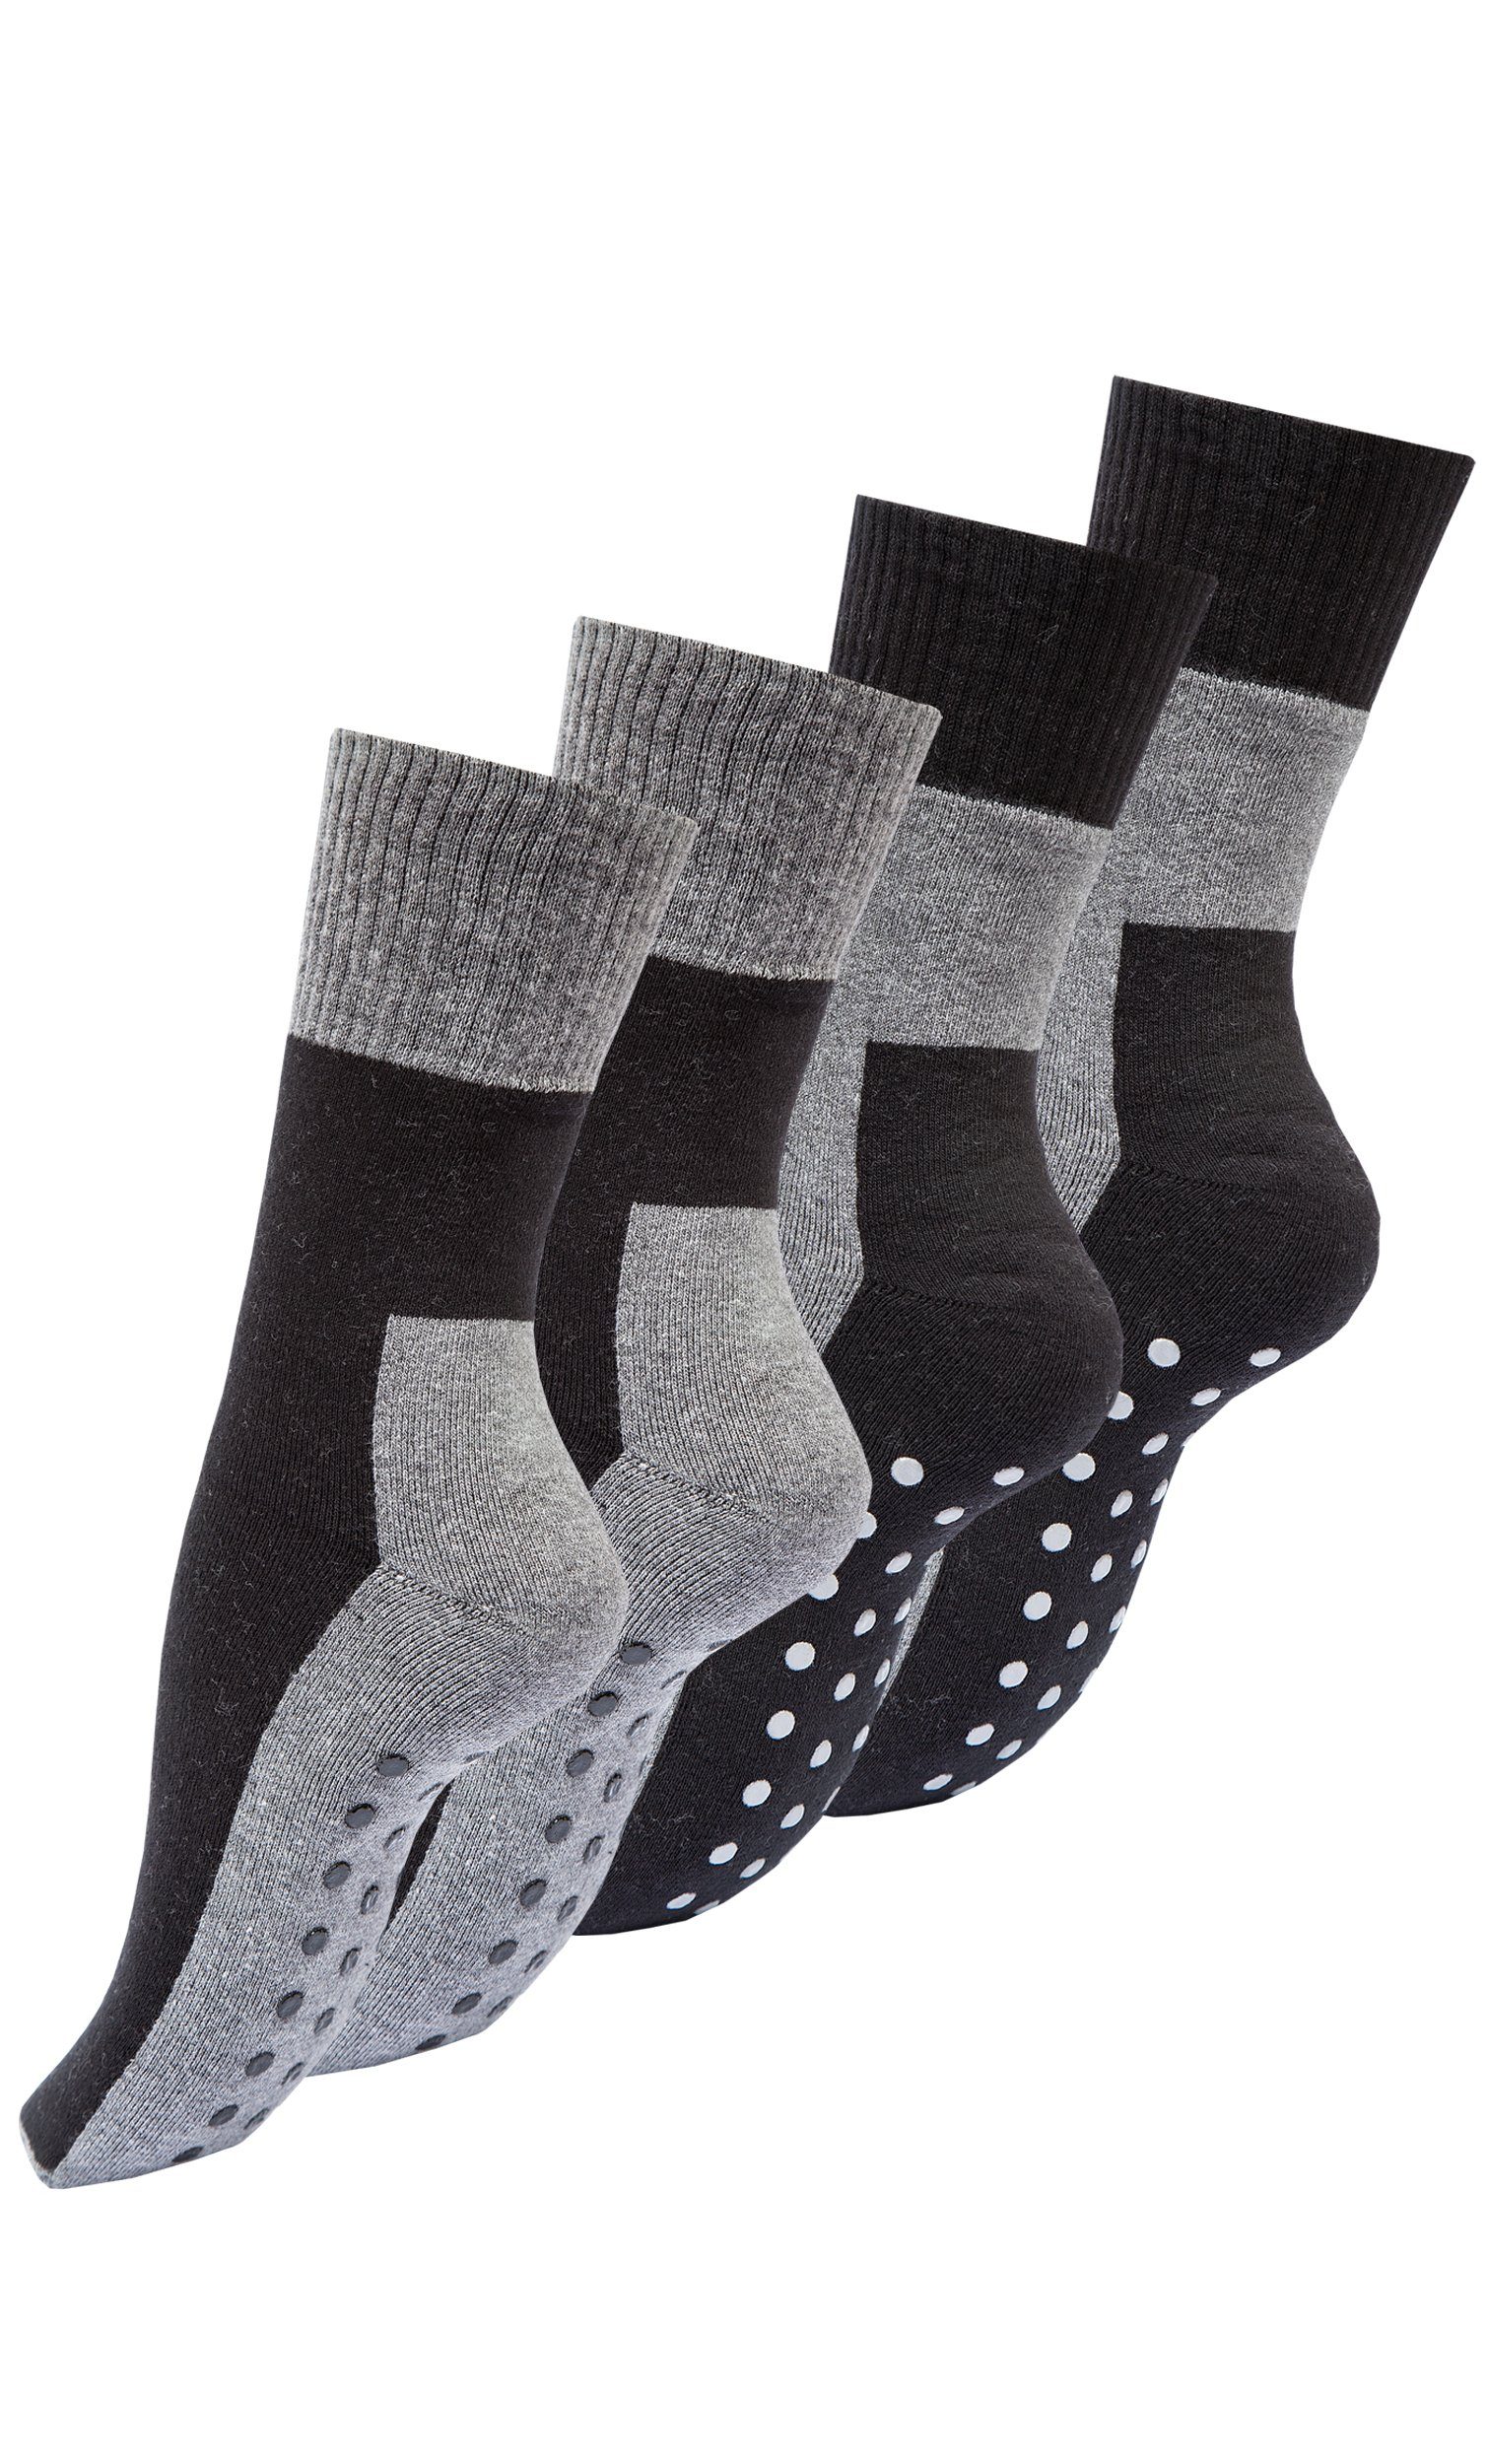 ABS-Sohle Vincent mit ABS-Socken Creation® (4-Paar) Stoppersocken